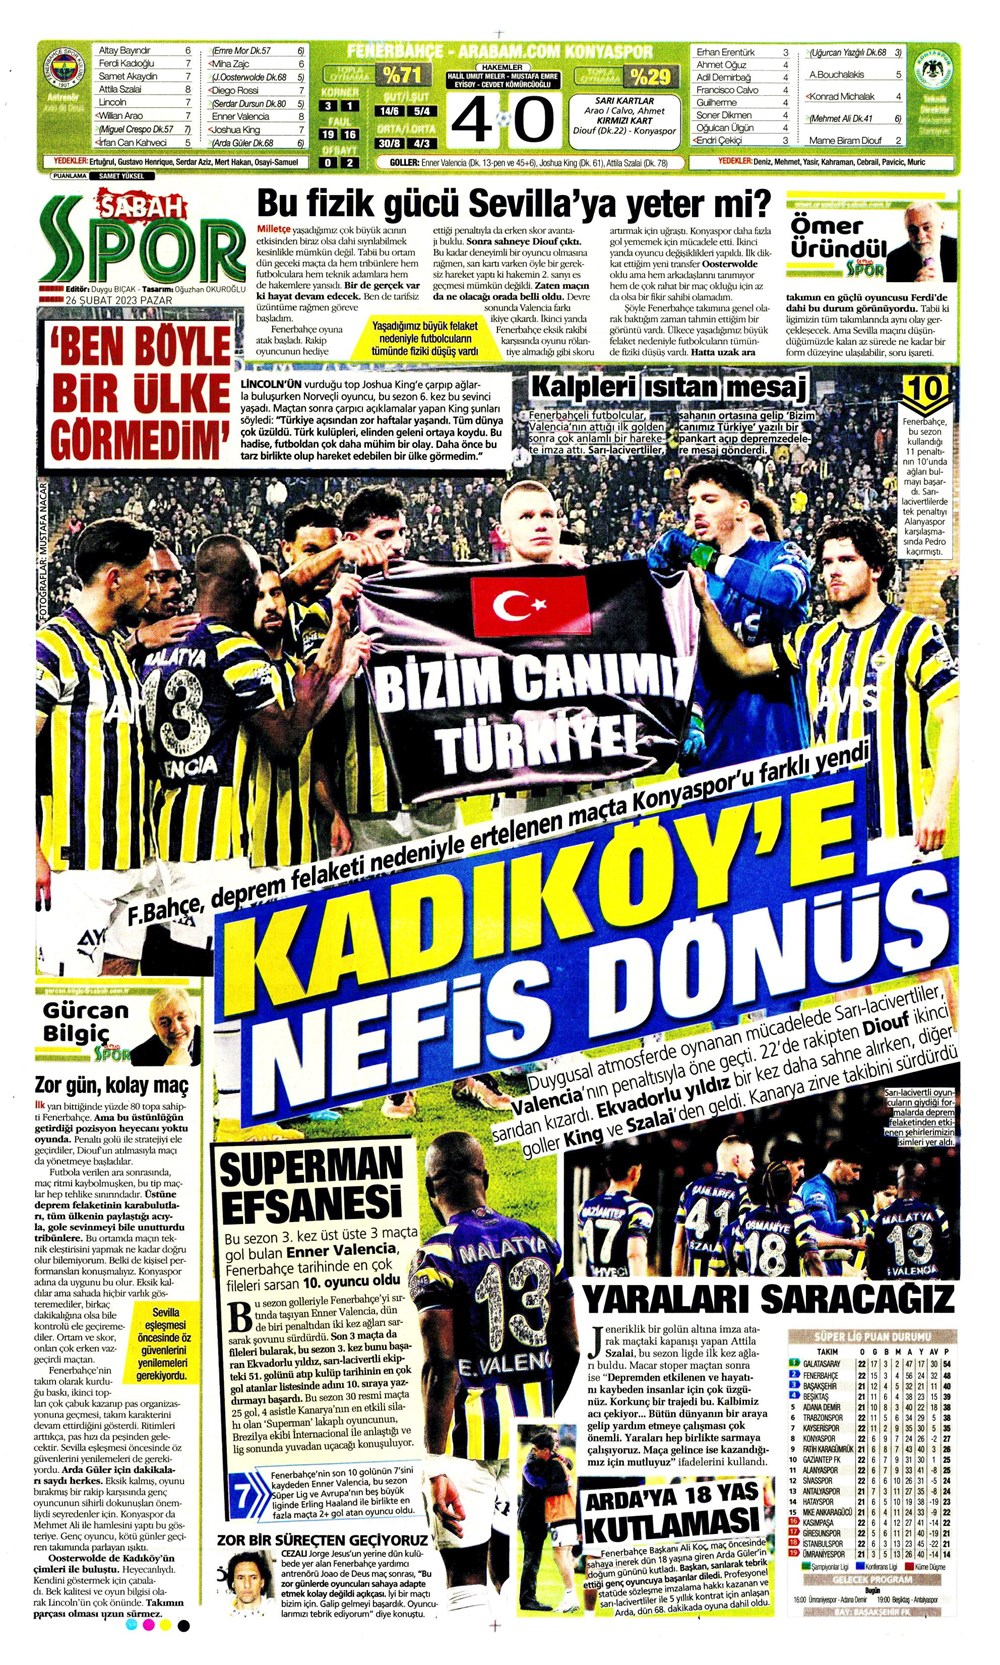 "Valenci'ağa' böyle istedi" - Sporun manşetleri  - 26. Foto